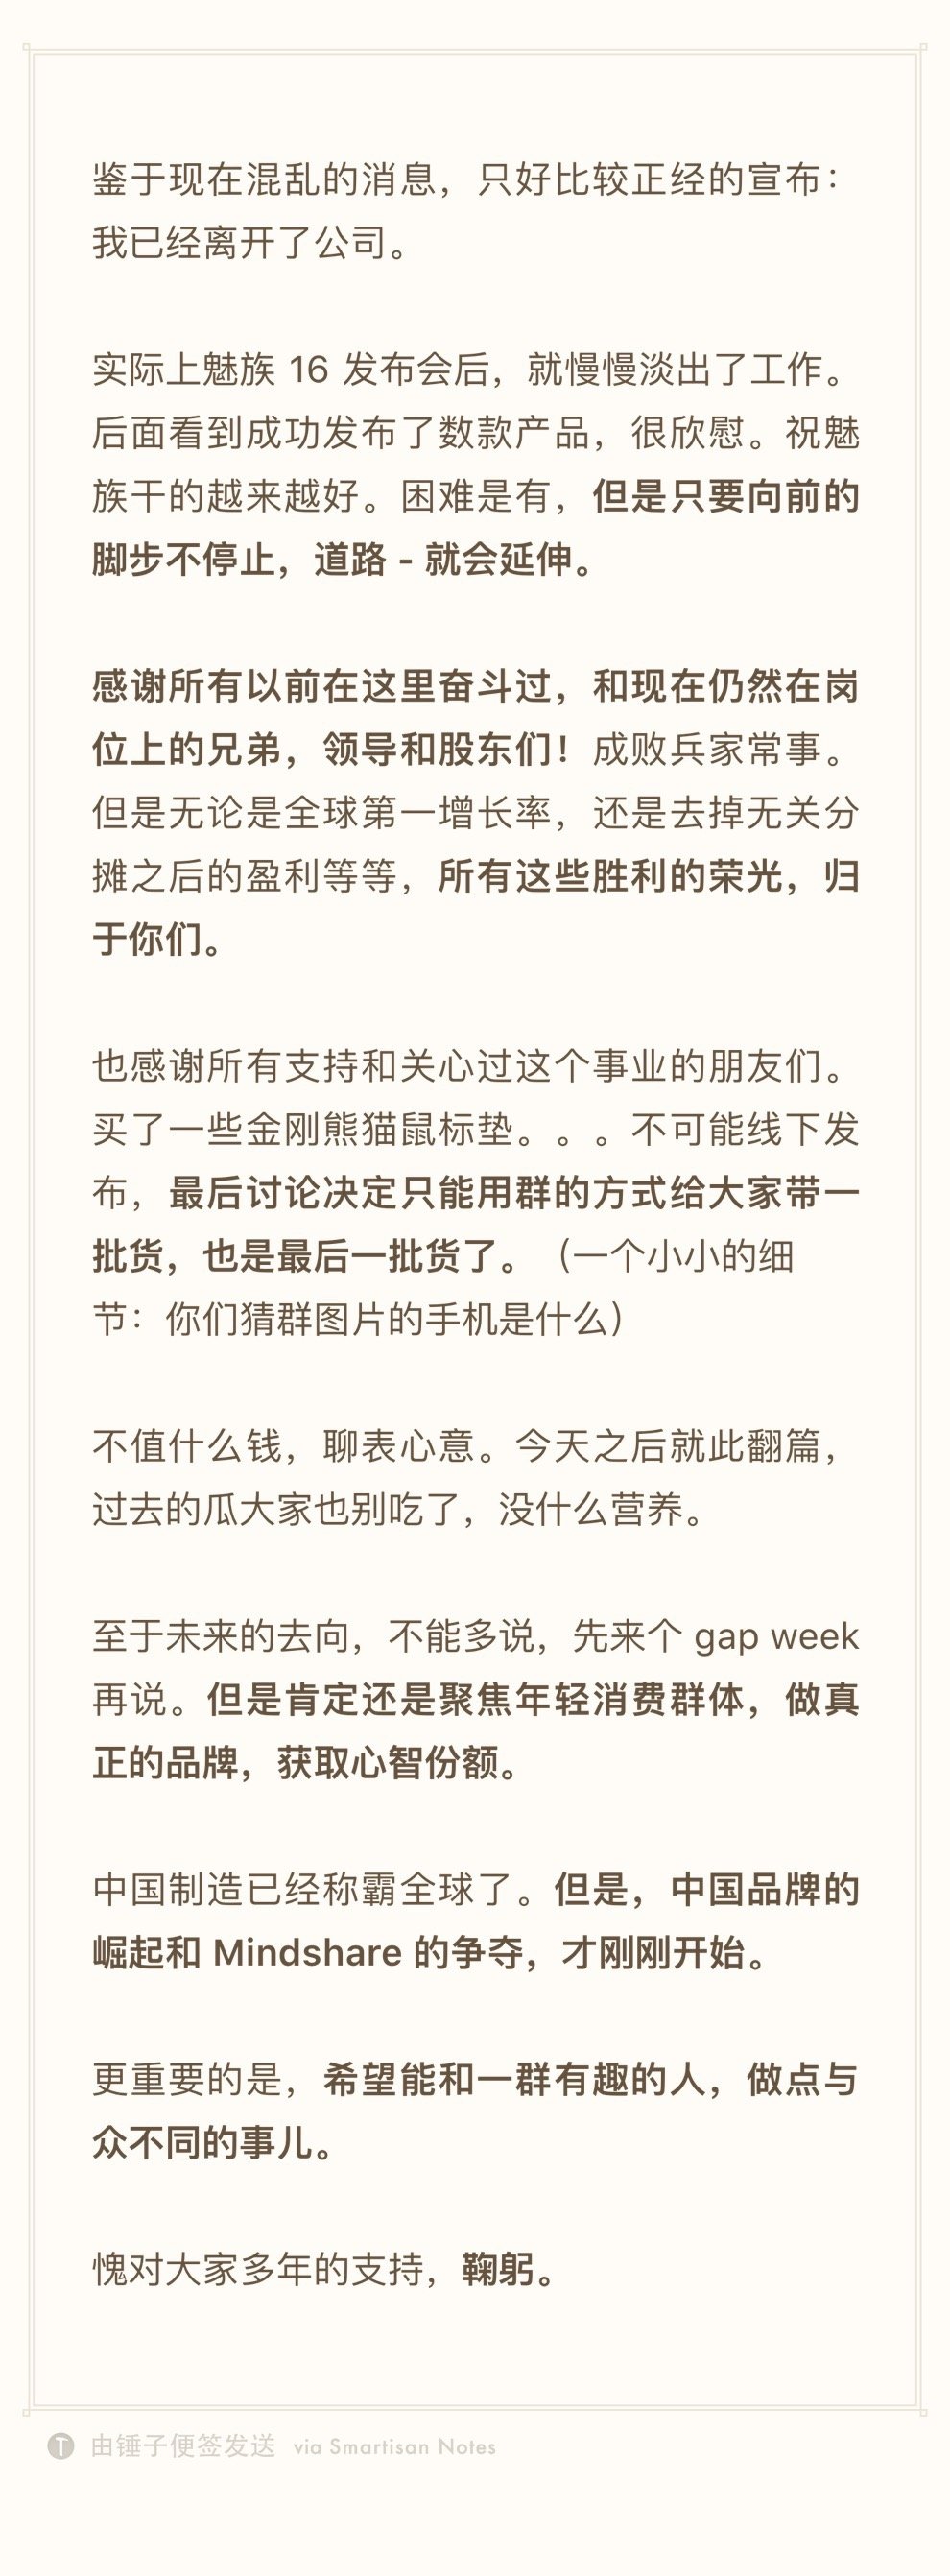 Li Nan resignation letter